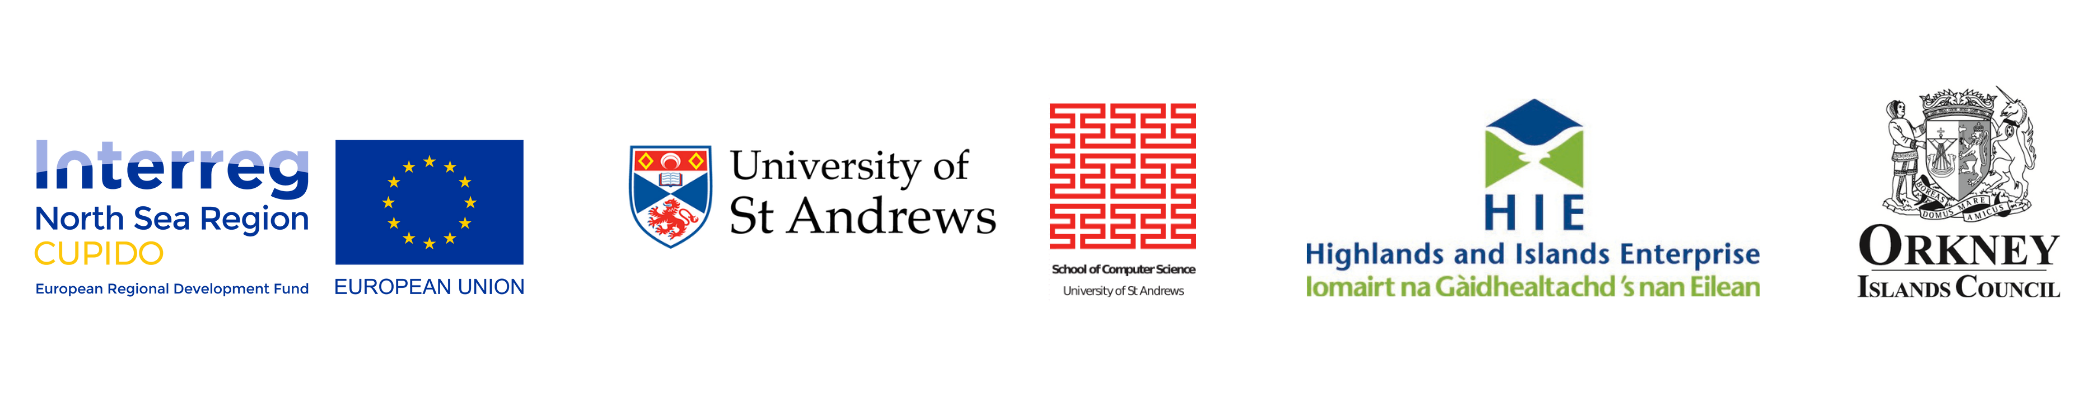 Partner logos - Interreg North Sea Region CUPIDO; University of St Andrews School of Computing Science, Highlands and Islands Enterprise.